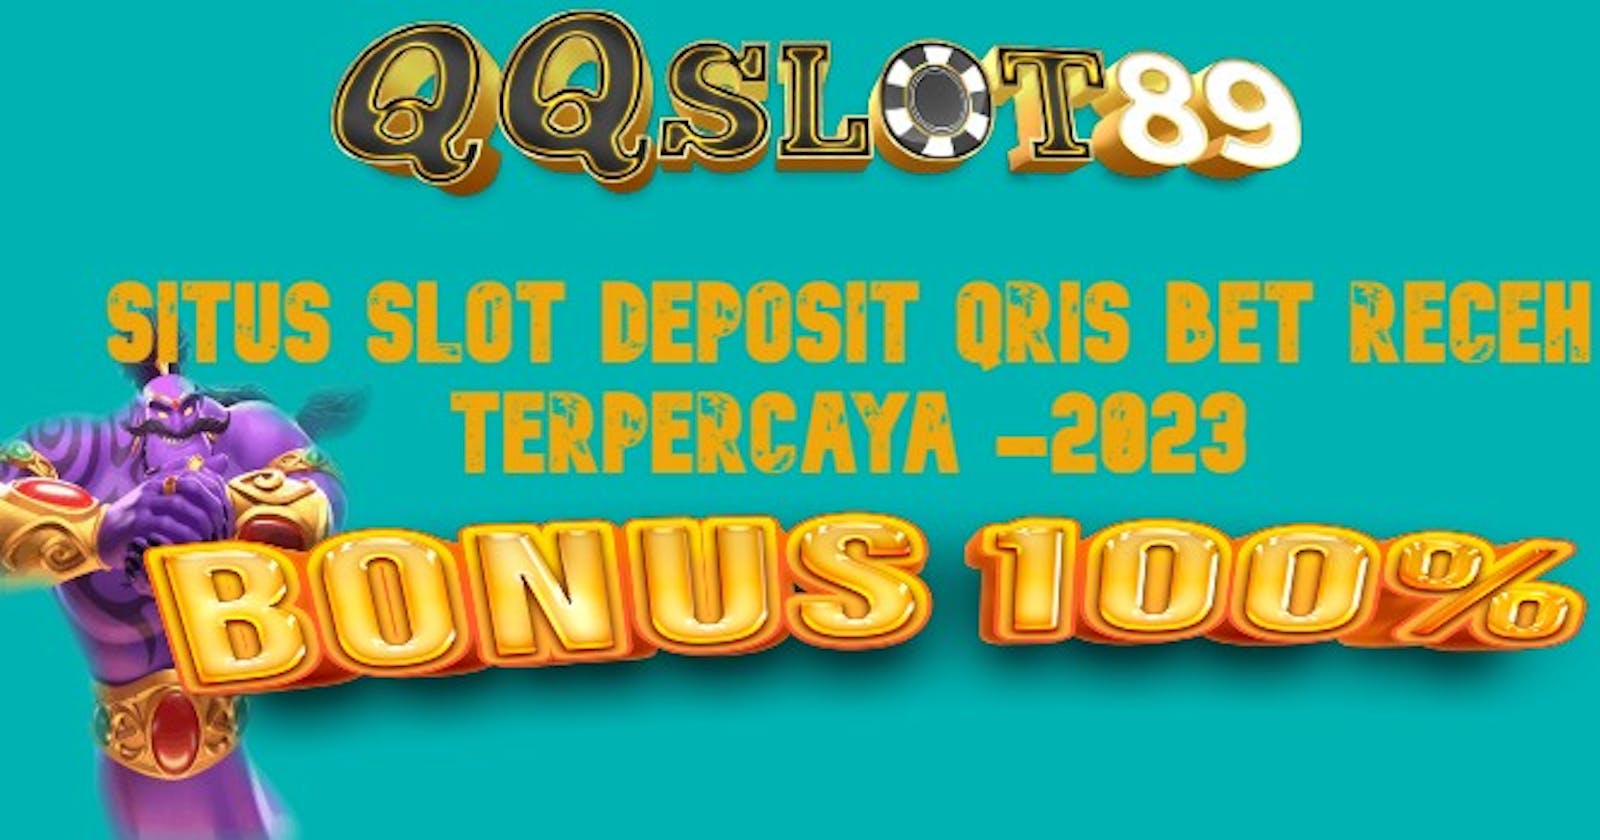 Situs Slot Deposit Qris Bet 200 Receh Terpercaya 2023